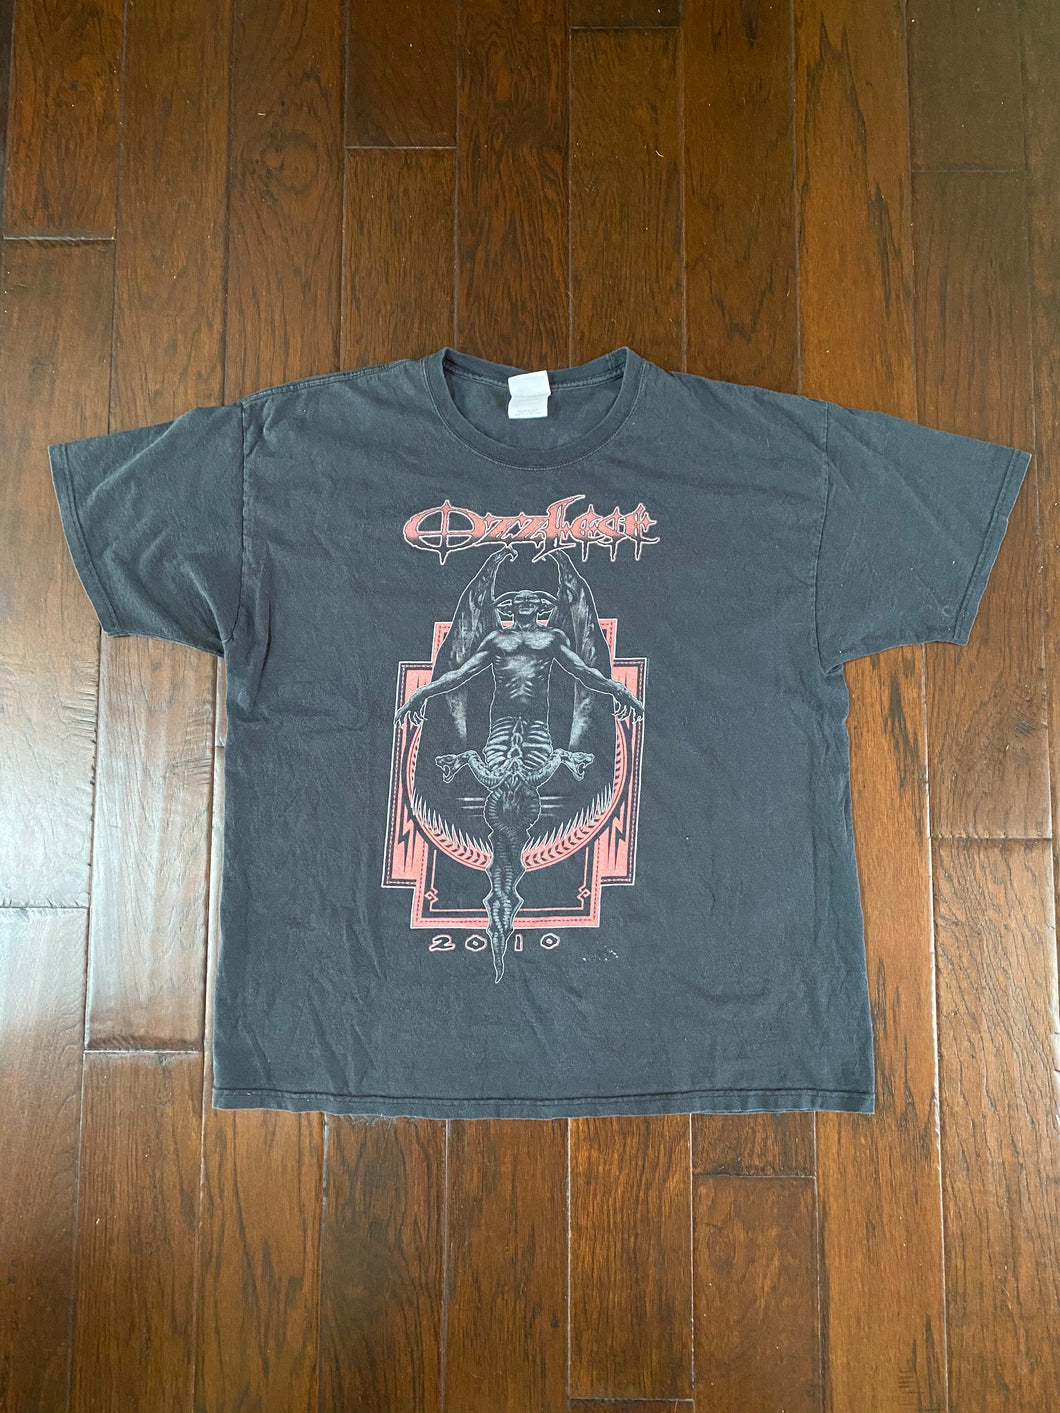 Ozzy Osbourne 2010 “Ozzfest” Vintage Distressed T-shirt